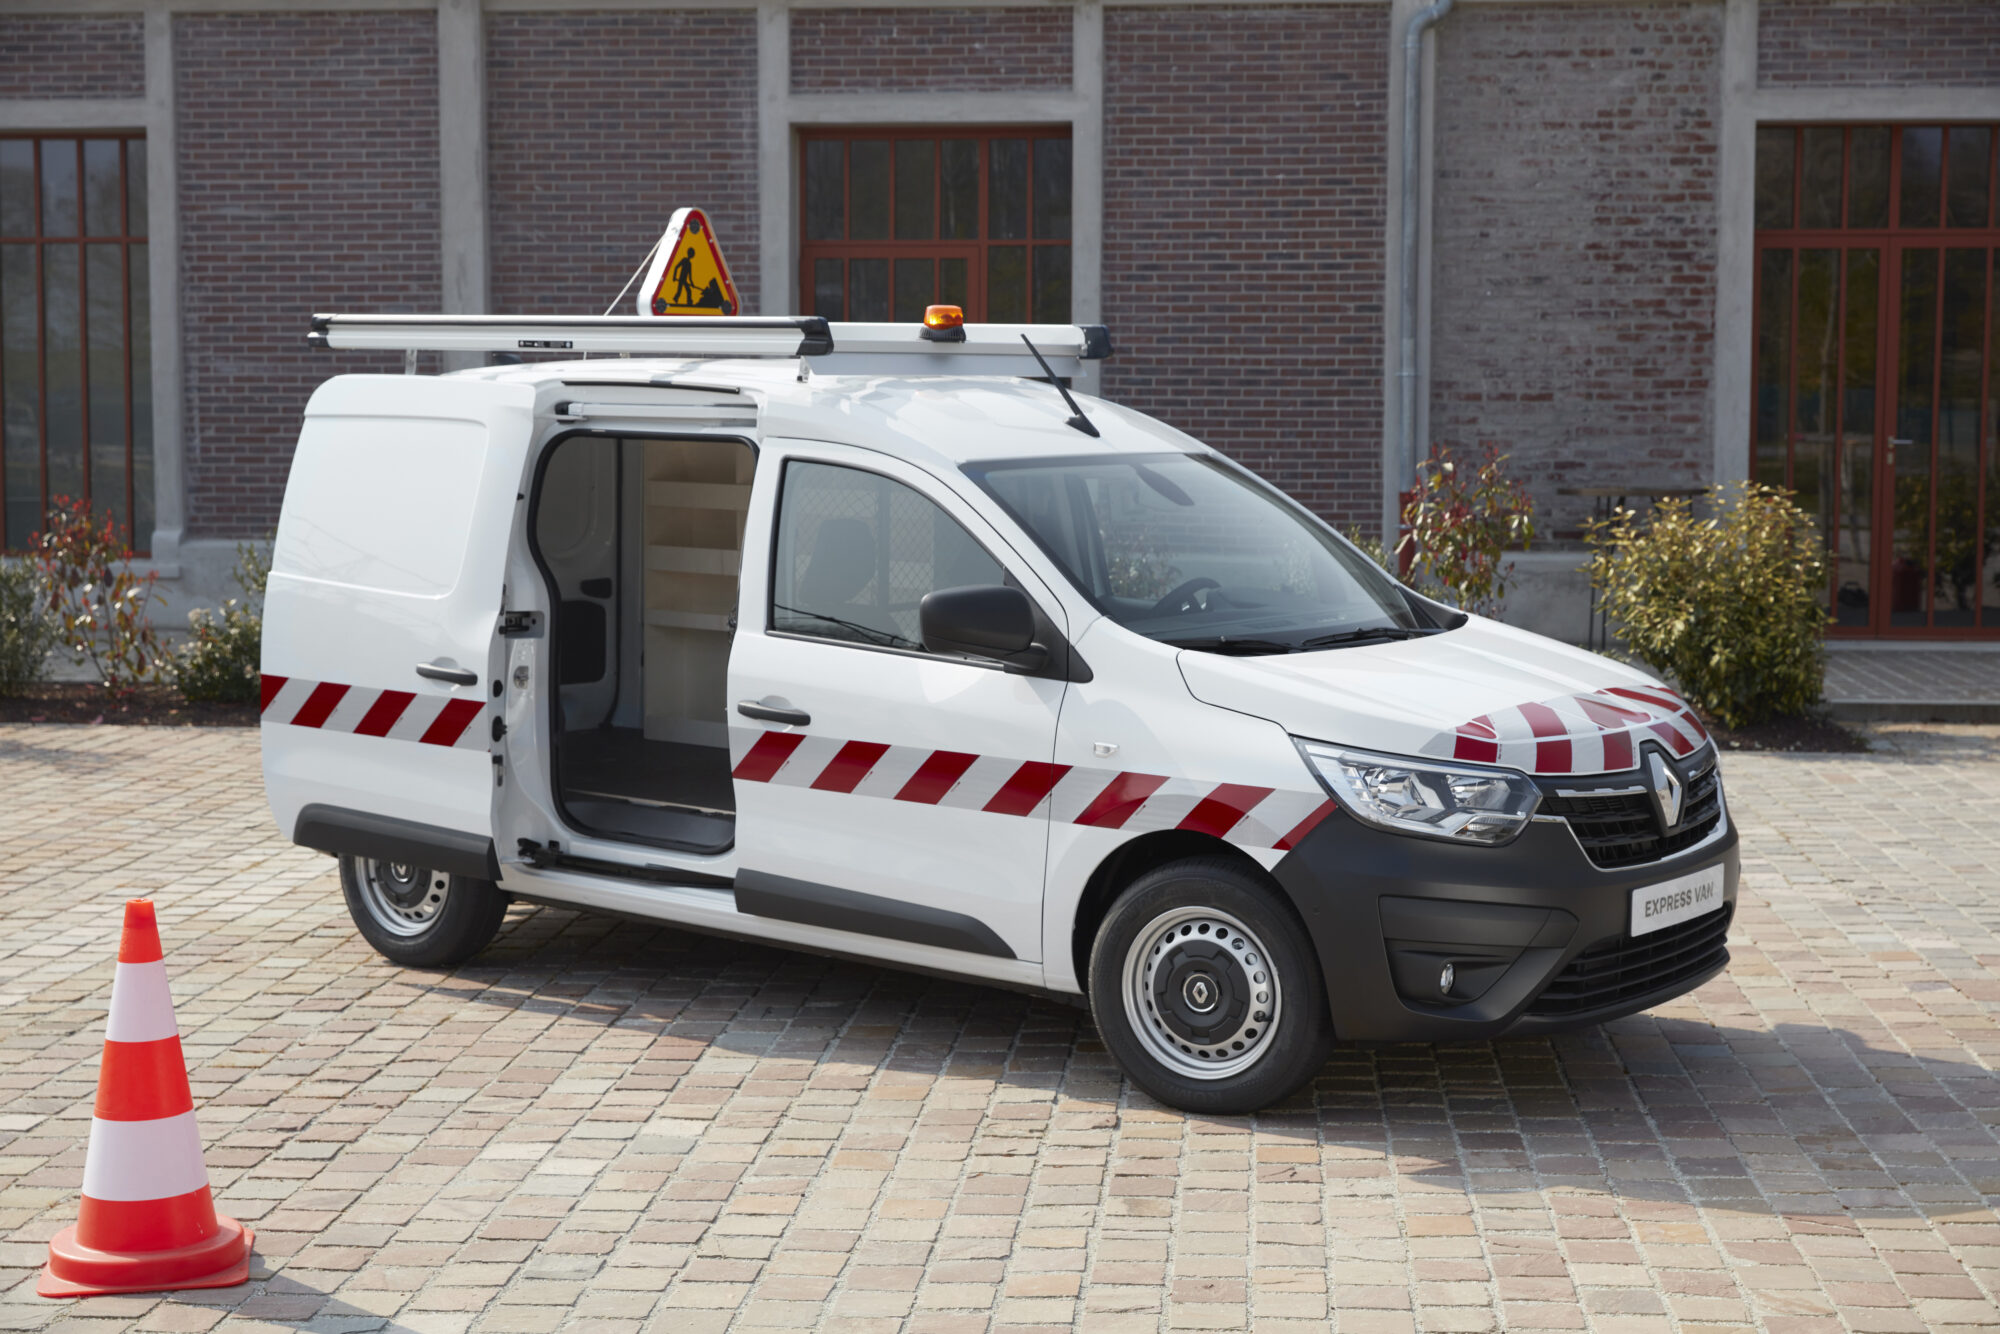 2021 - New Renault Express Van - Tests drive - Converted vehicles